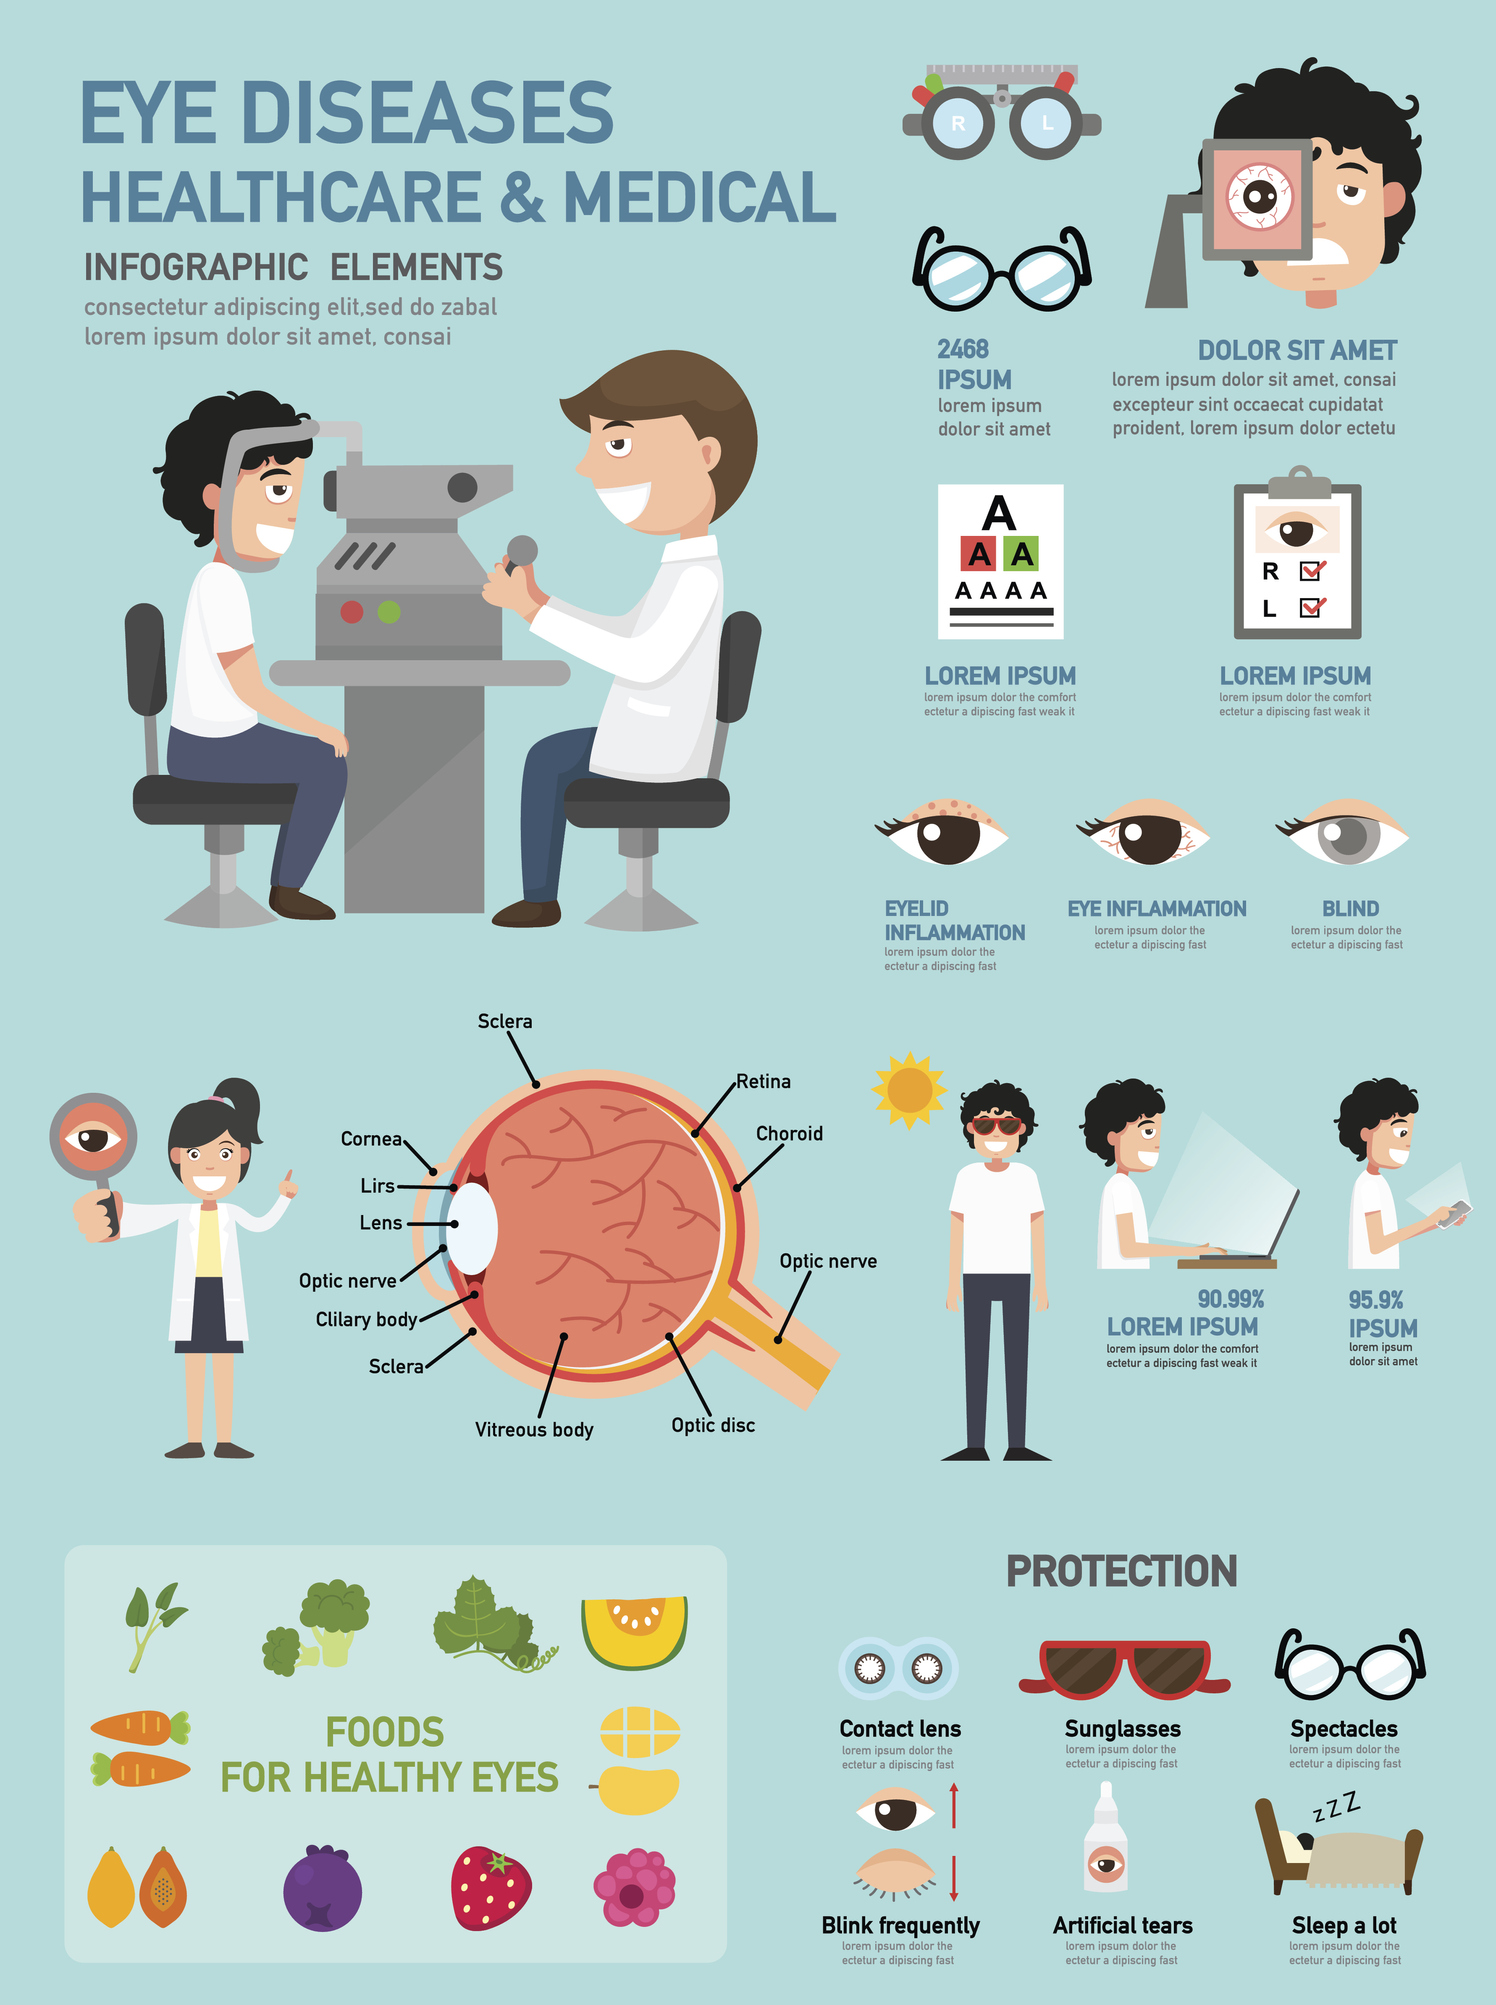 Managing Thyroid Eye Disease (TED) for Better Eye Health